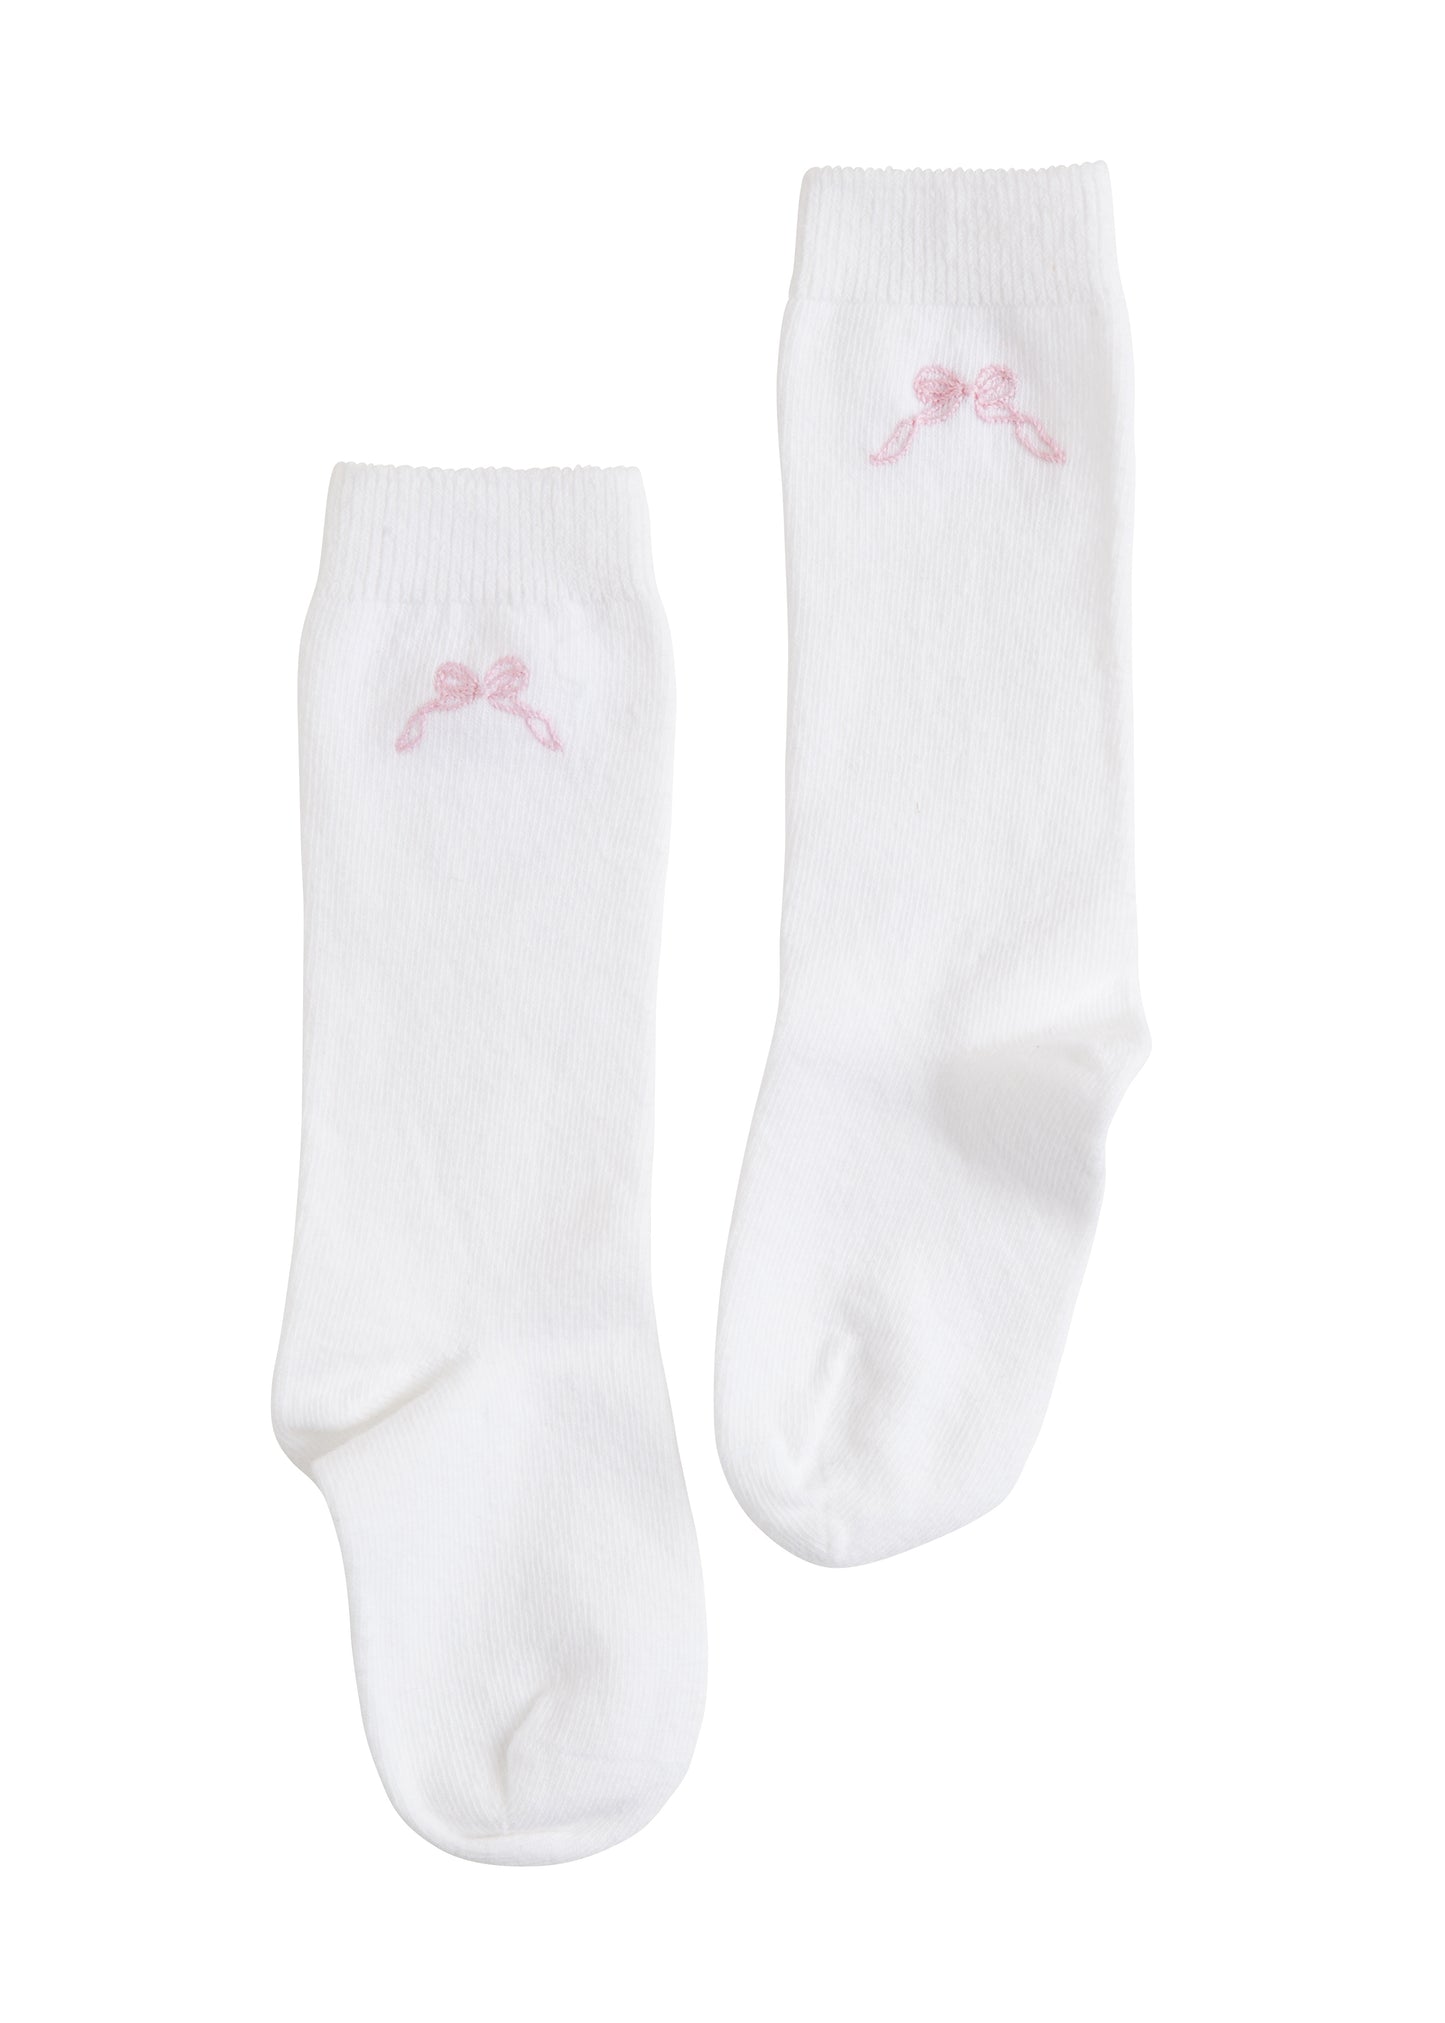 Knee High Socks - Pink Bow